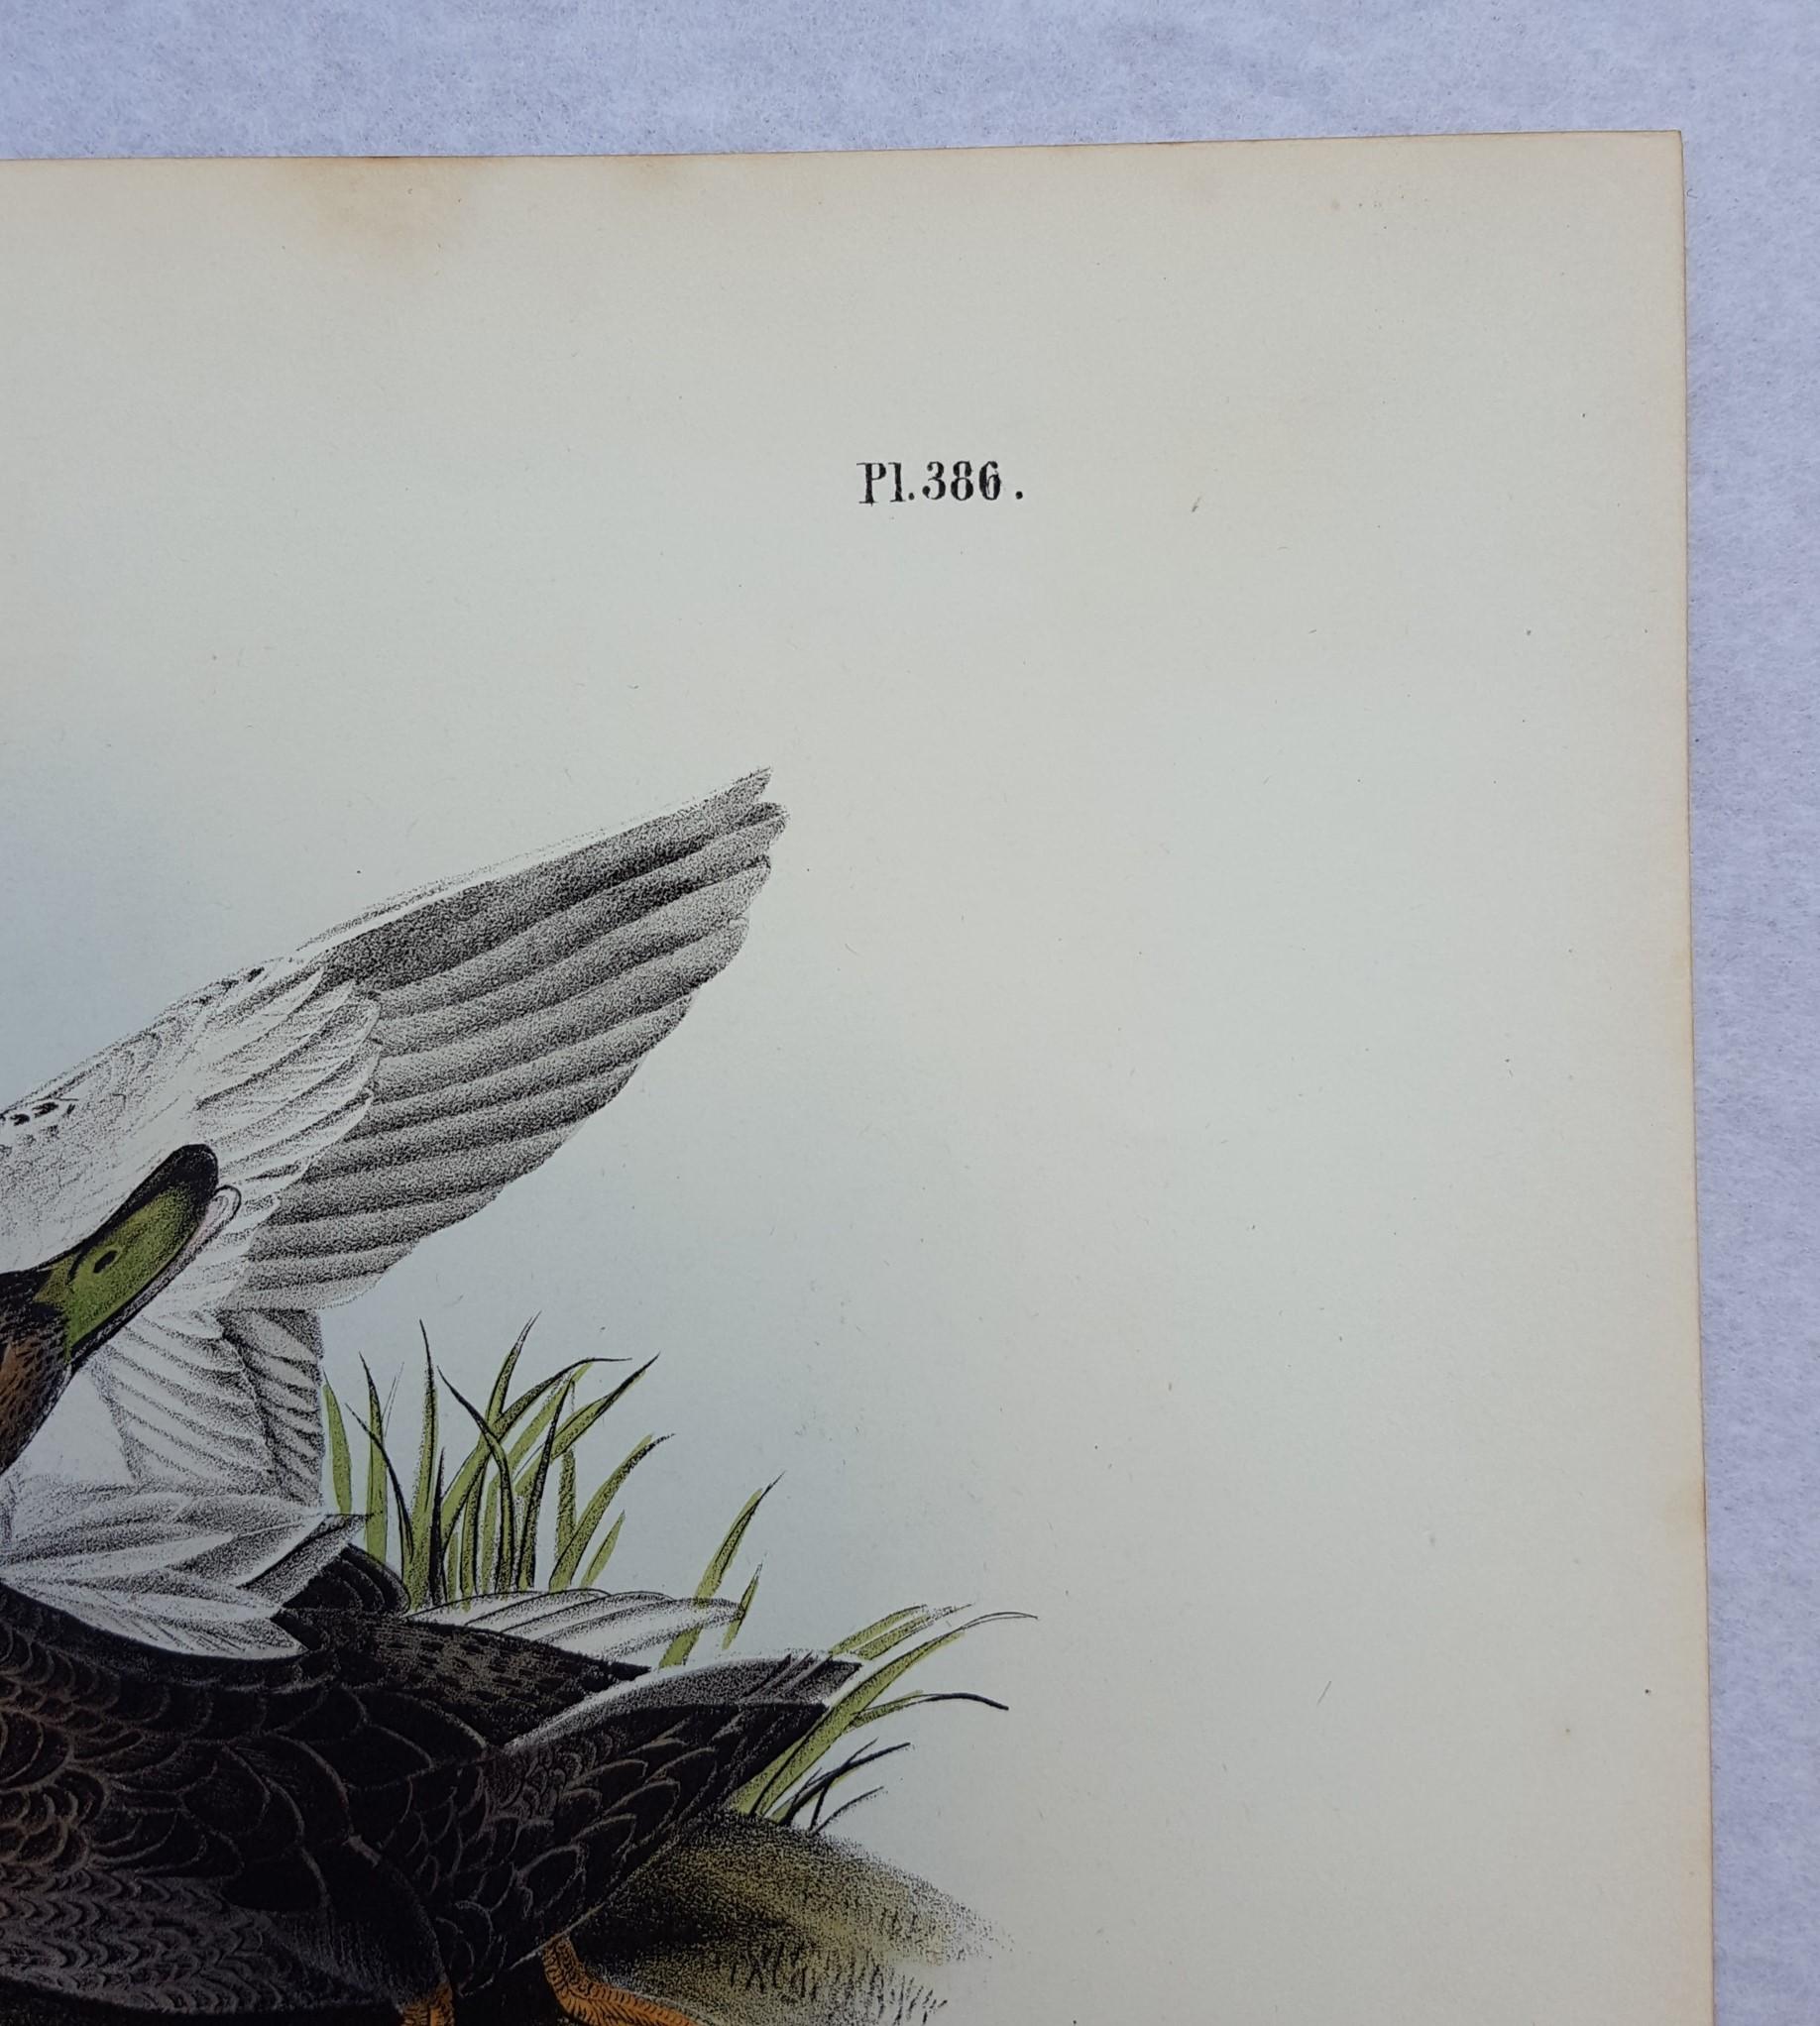 An original hand-colored lithograph on wove paper by American artist John James Audubon (1785-1851) titled 